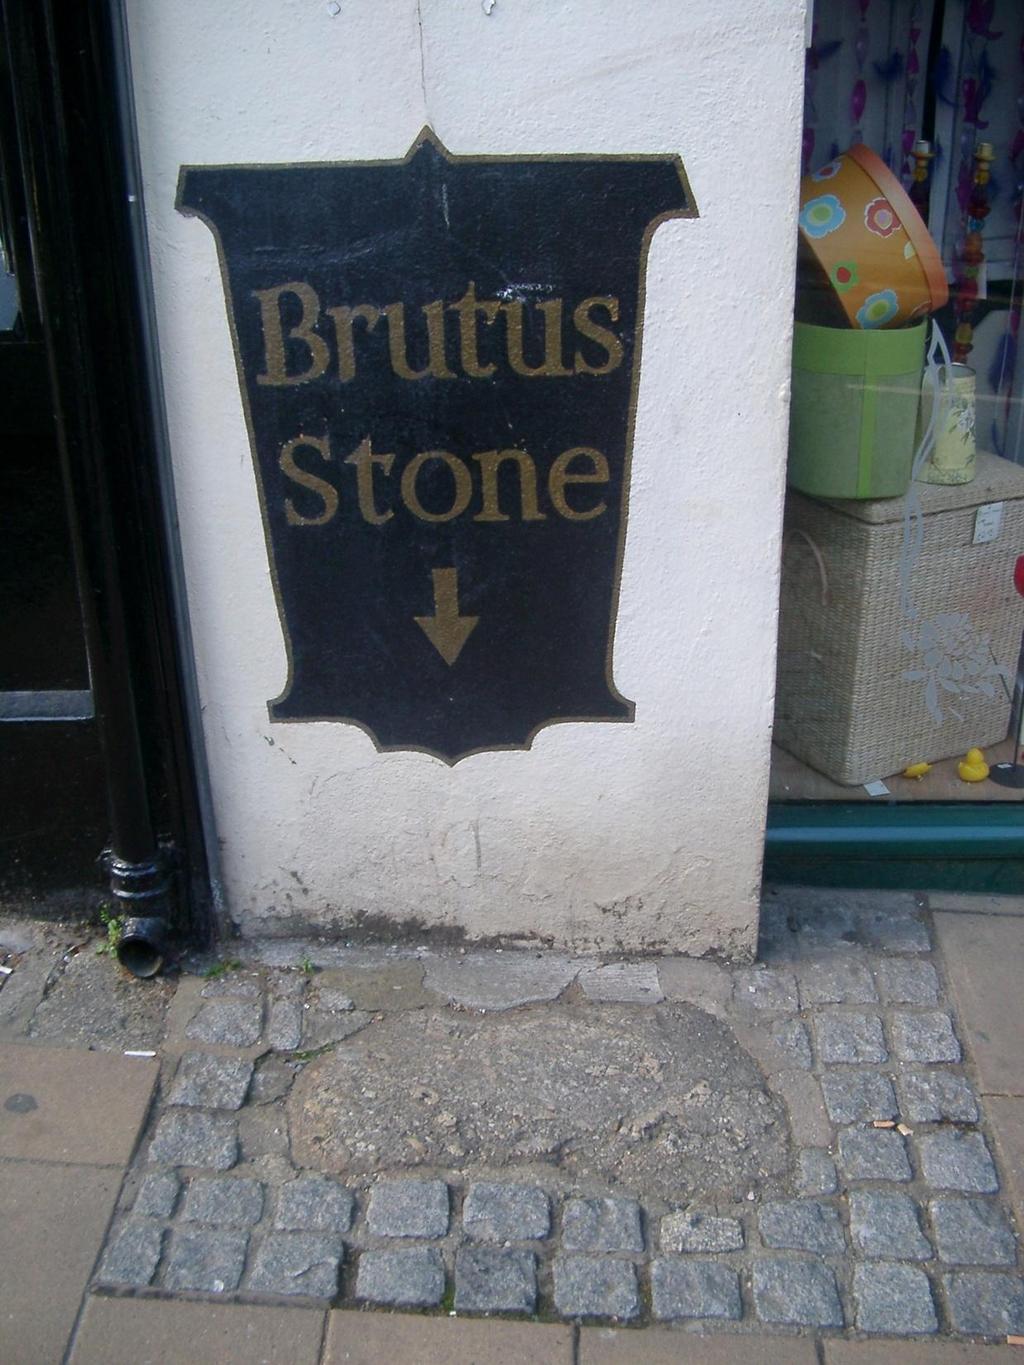 The Brutus Stone,